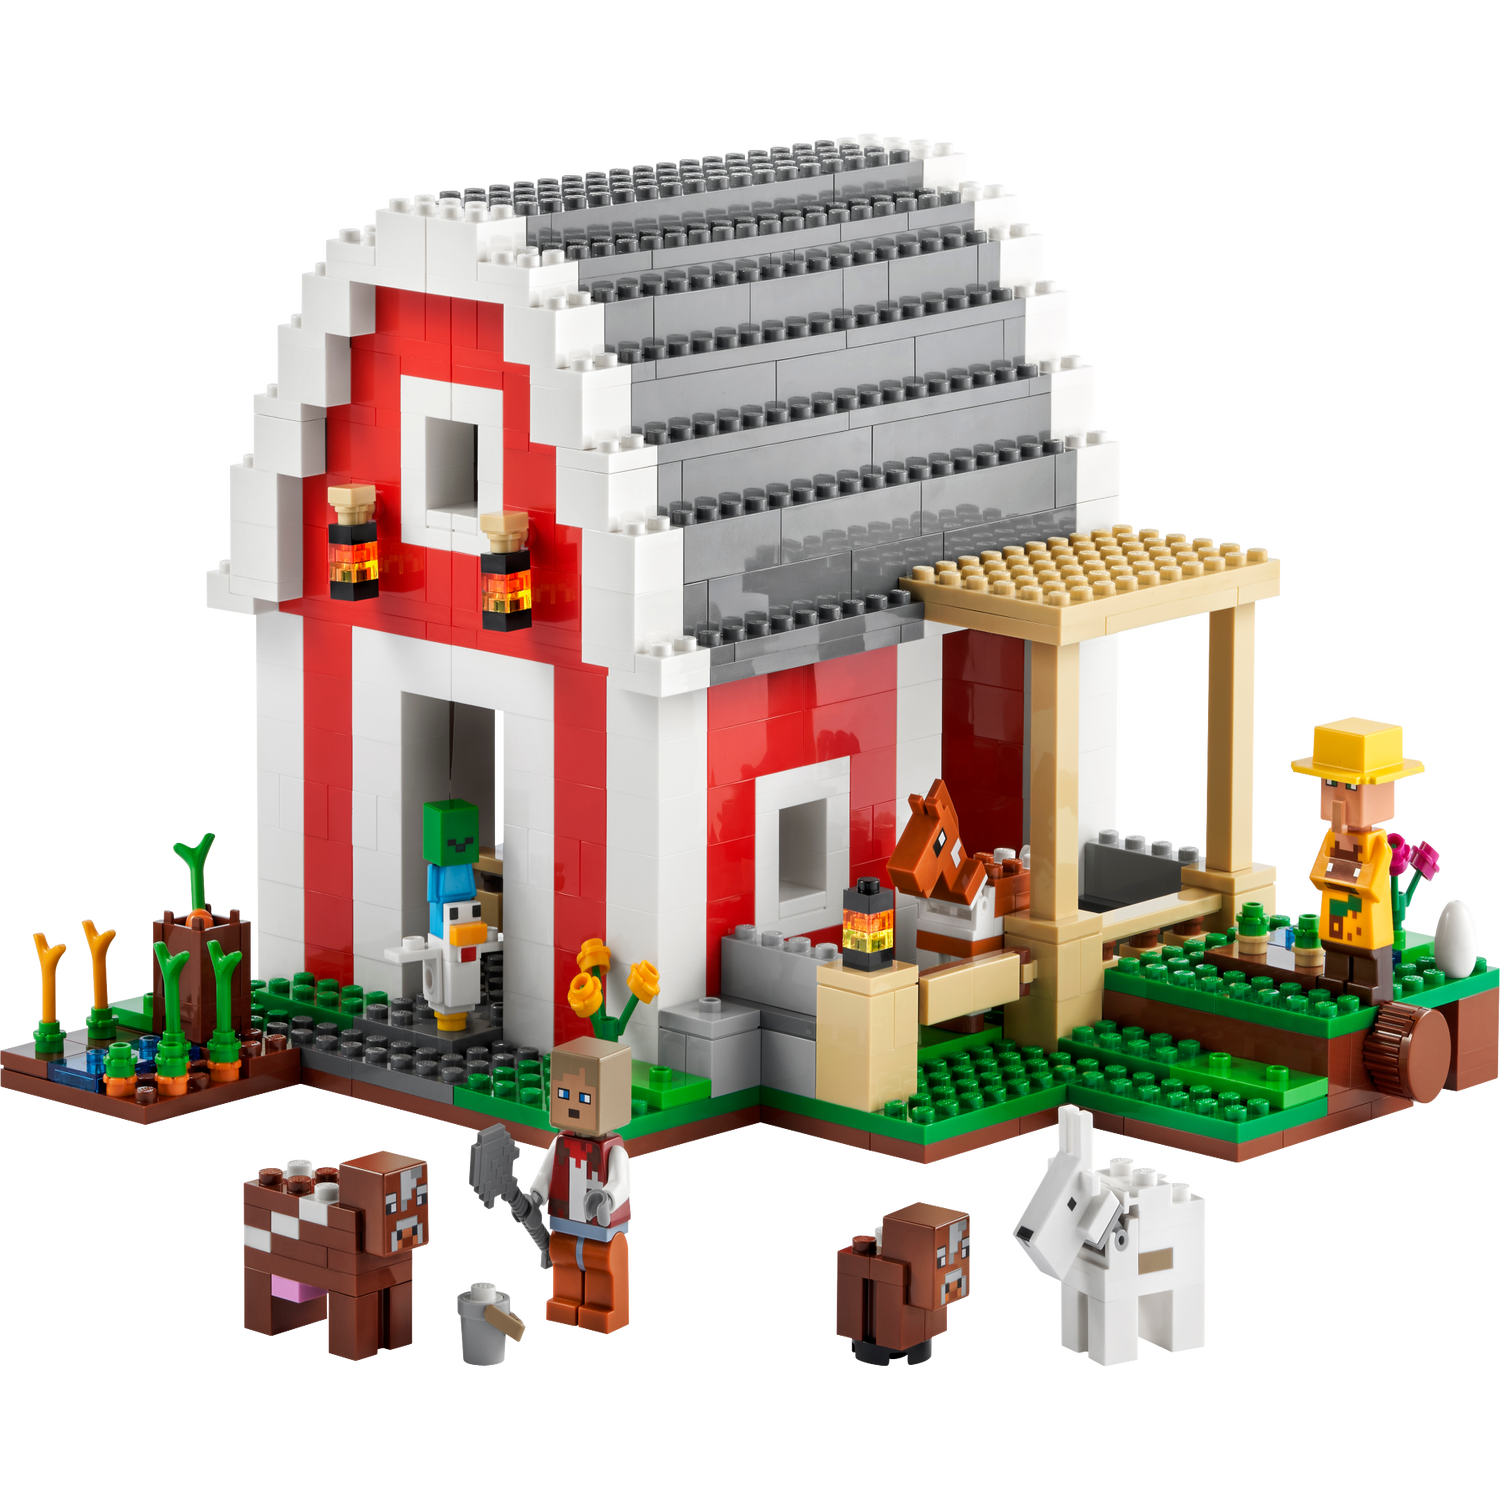 Stirre bestyrelse Frivillig The Red Barn 21187 | Minecraft® | Buy online at the Official LEGO® Shop US